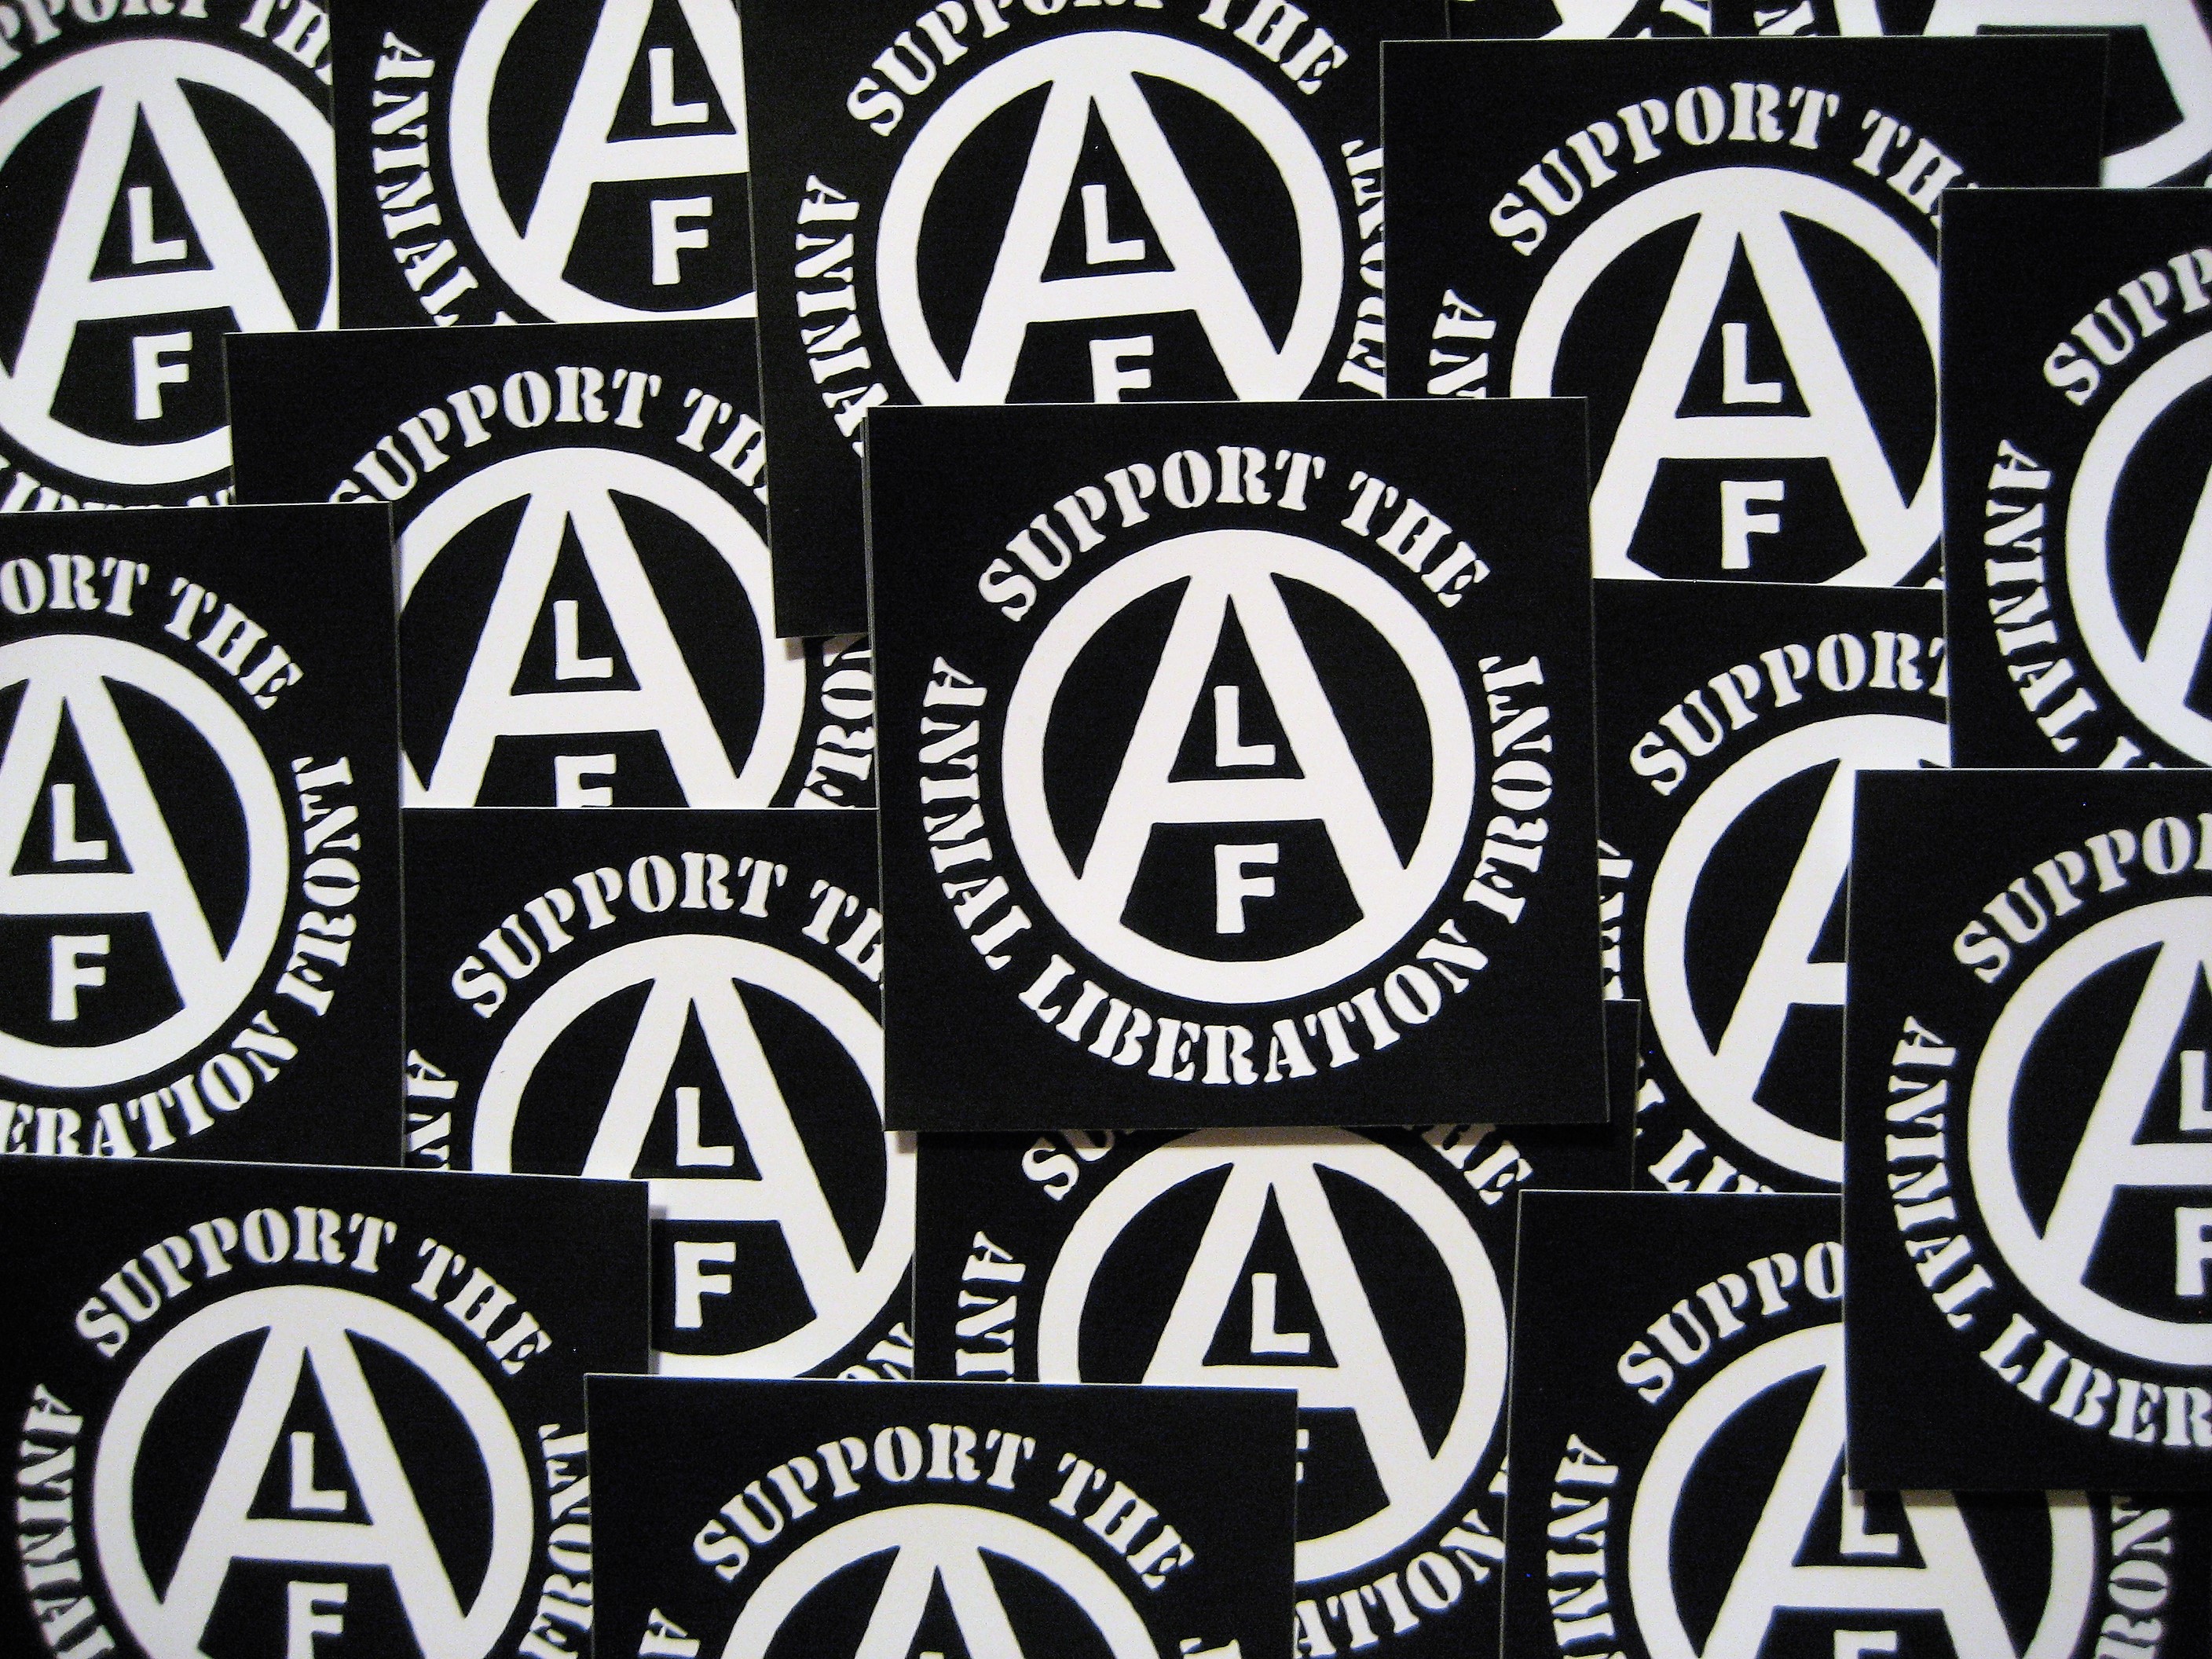 Animal Liberation Front (ALF) Sticker